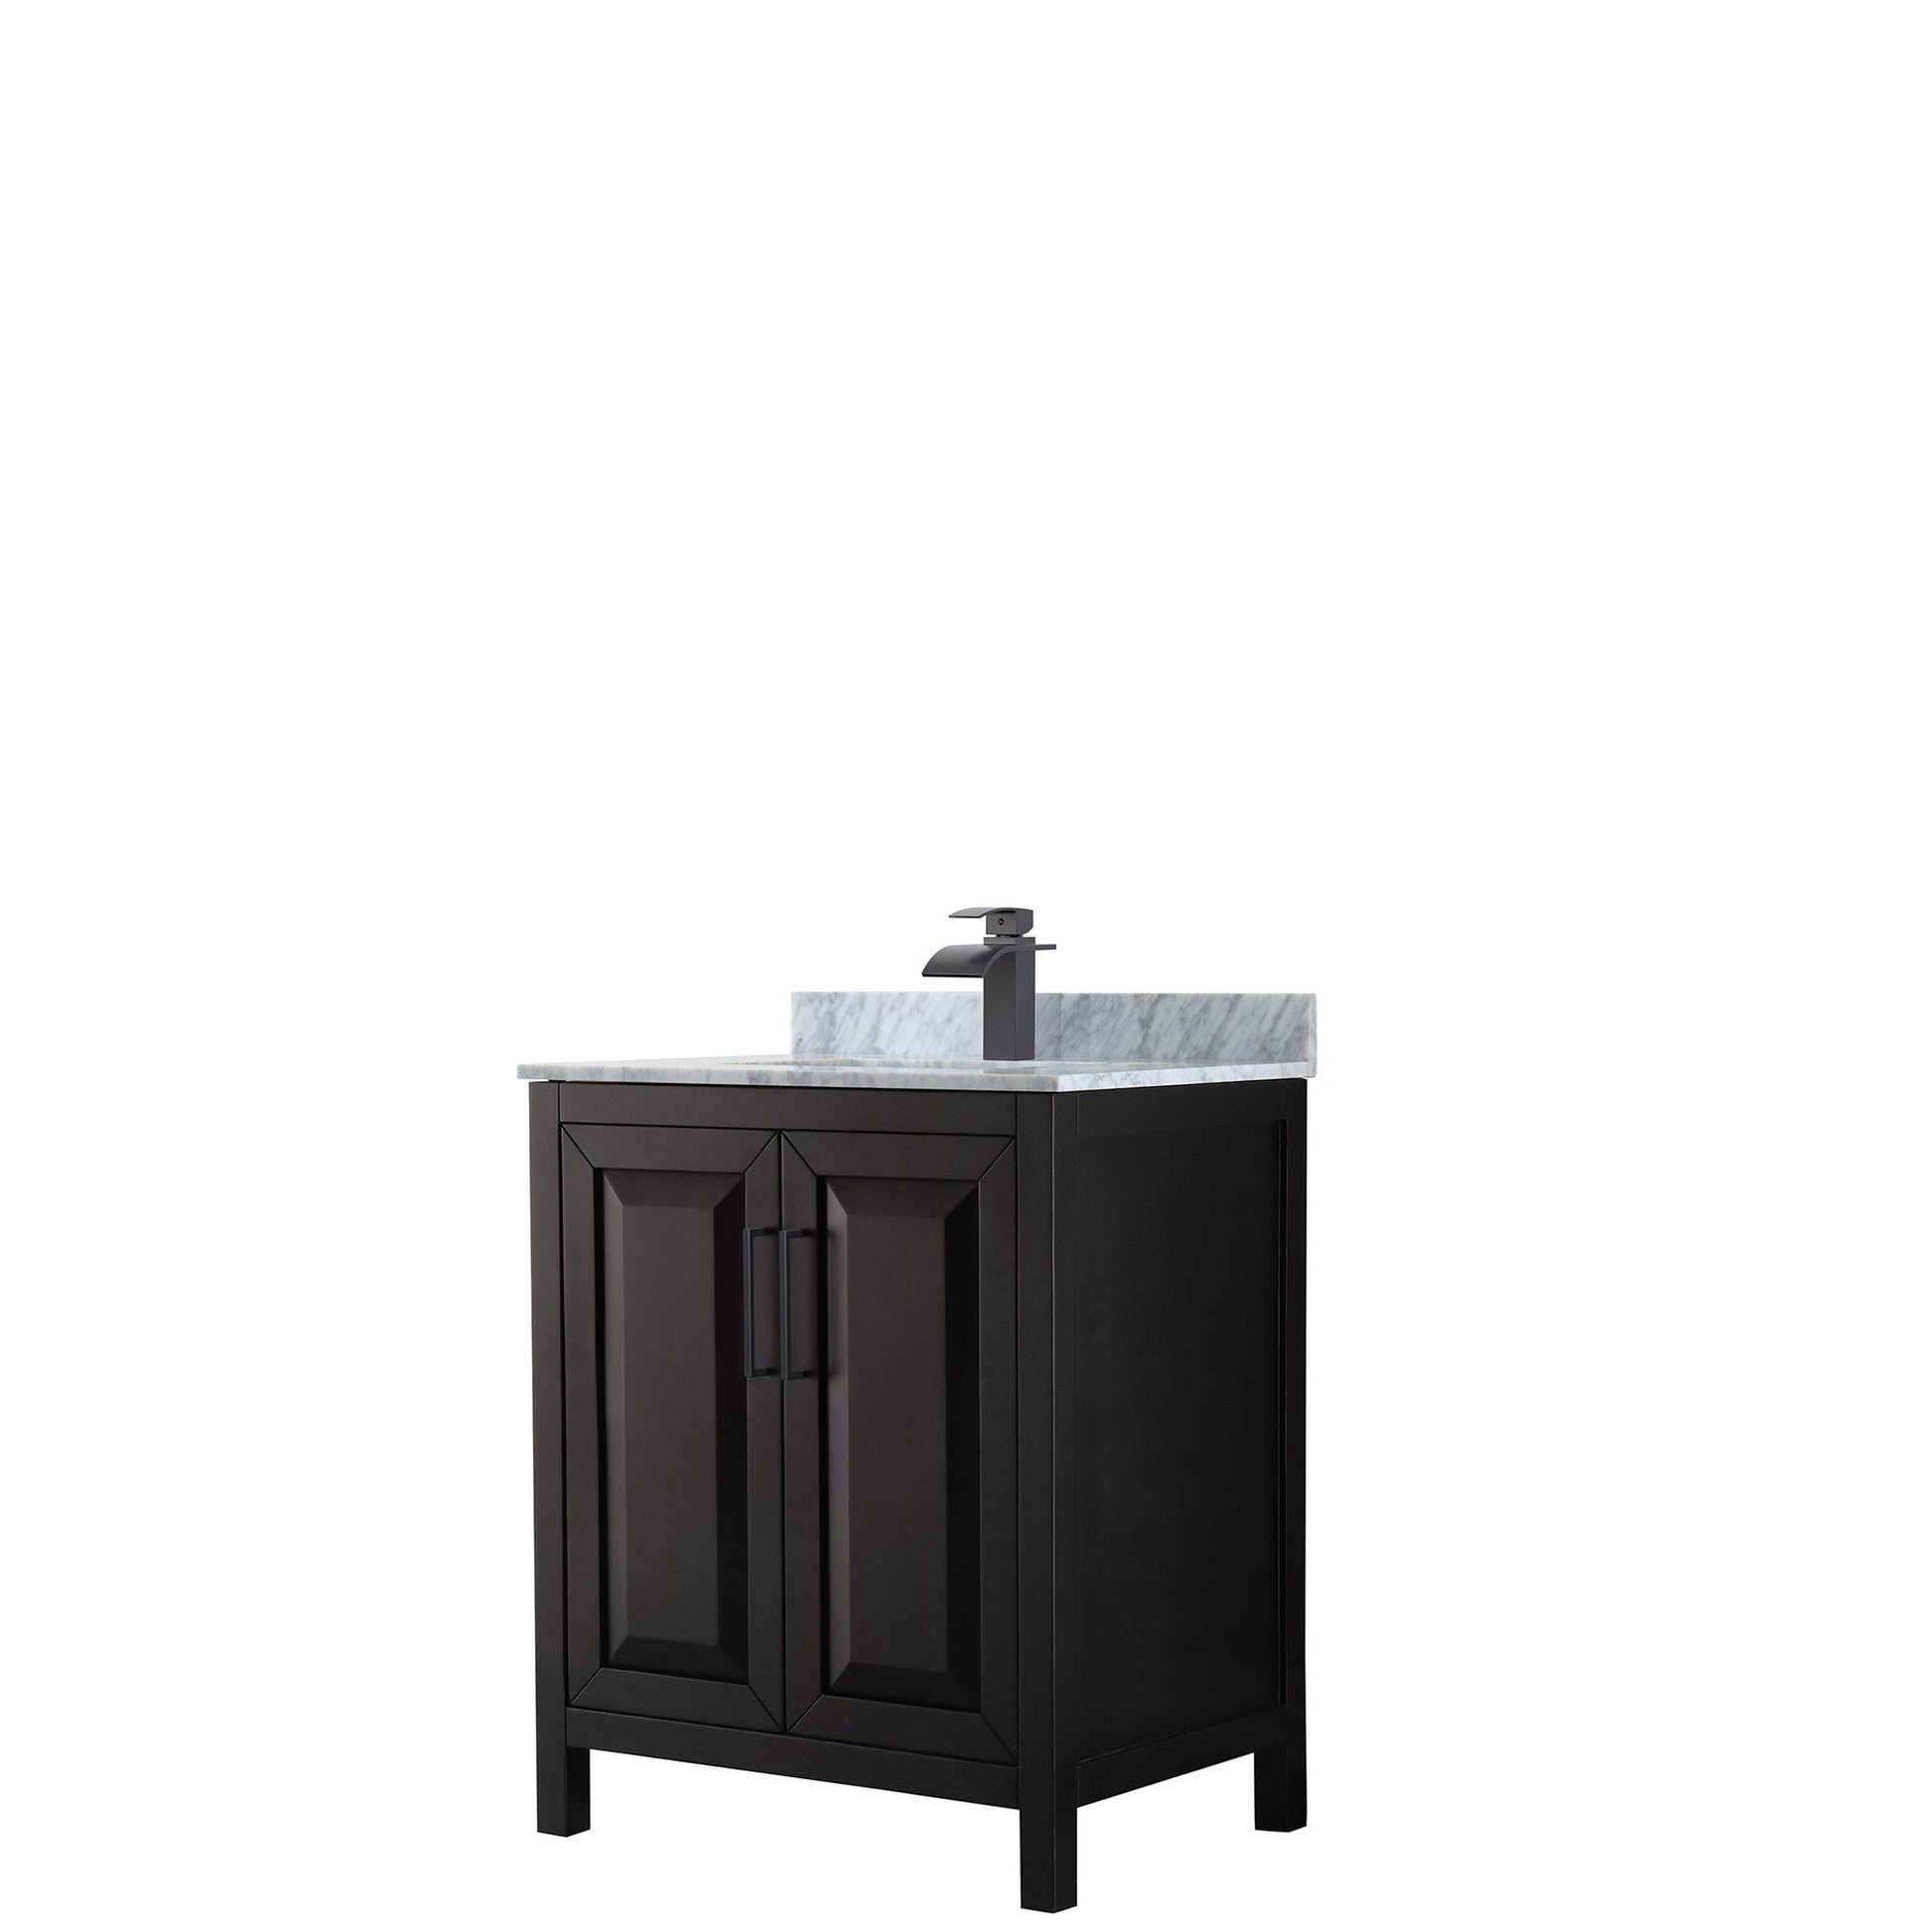 Daria 30" Single Bathroom Vanity in Dark Espresso, White Carrara Marble Countertop, Undermount Square Sink, Matte Black Trim